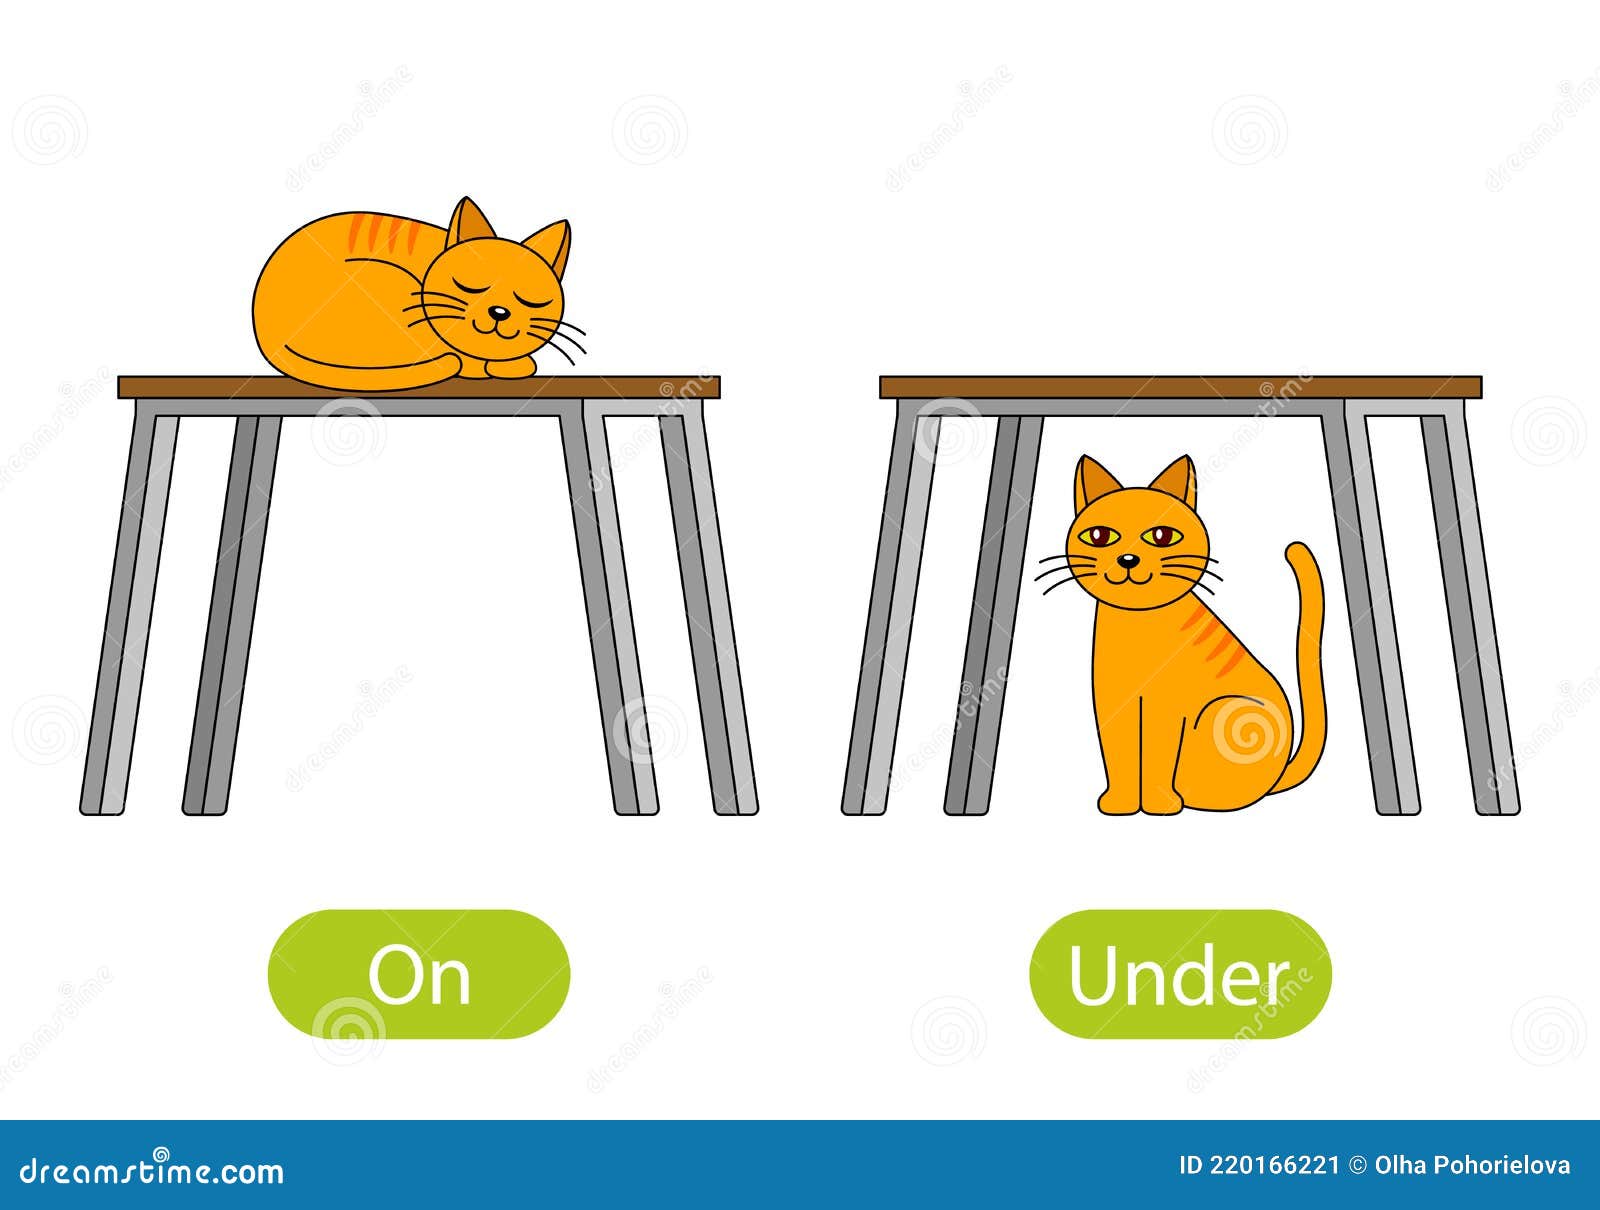 https://thumbs.dreamstime.com/z/cat-sleeps-table-sits-under-concept-children-s-learning-opposite-prepositions-220166221.jpg